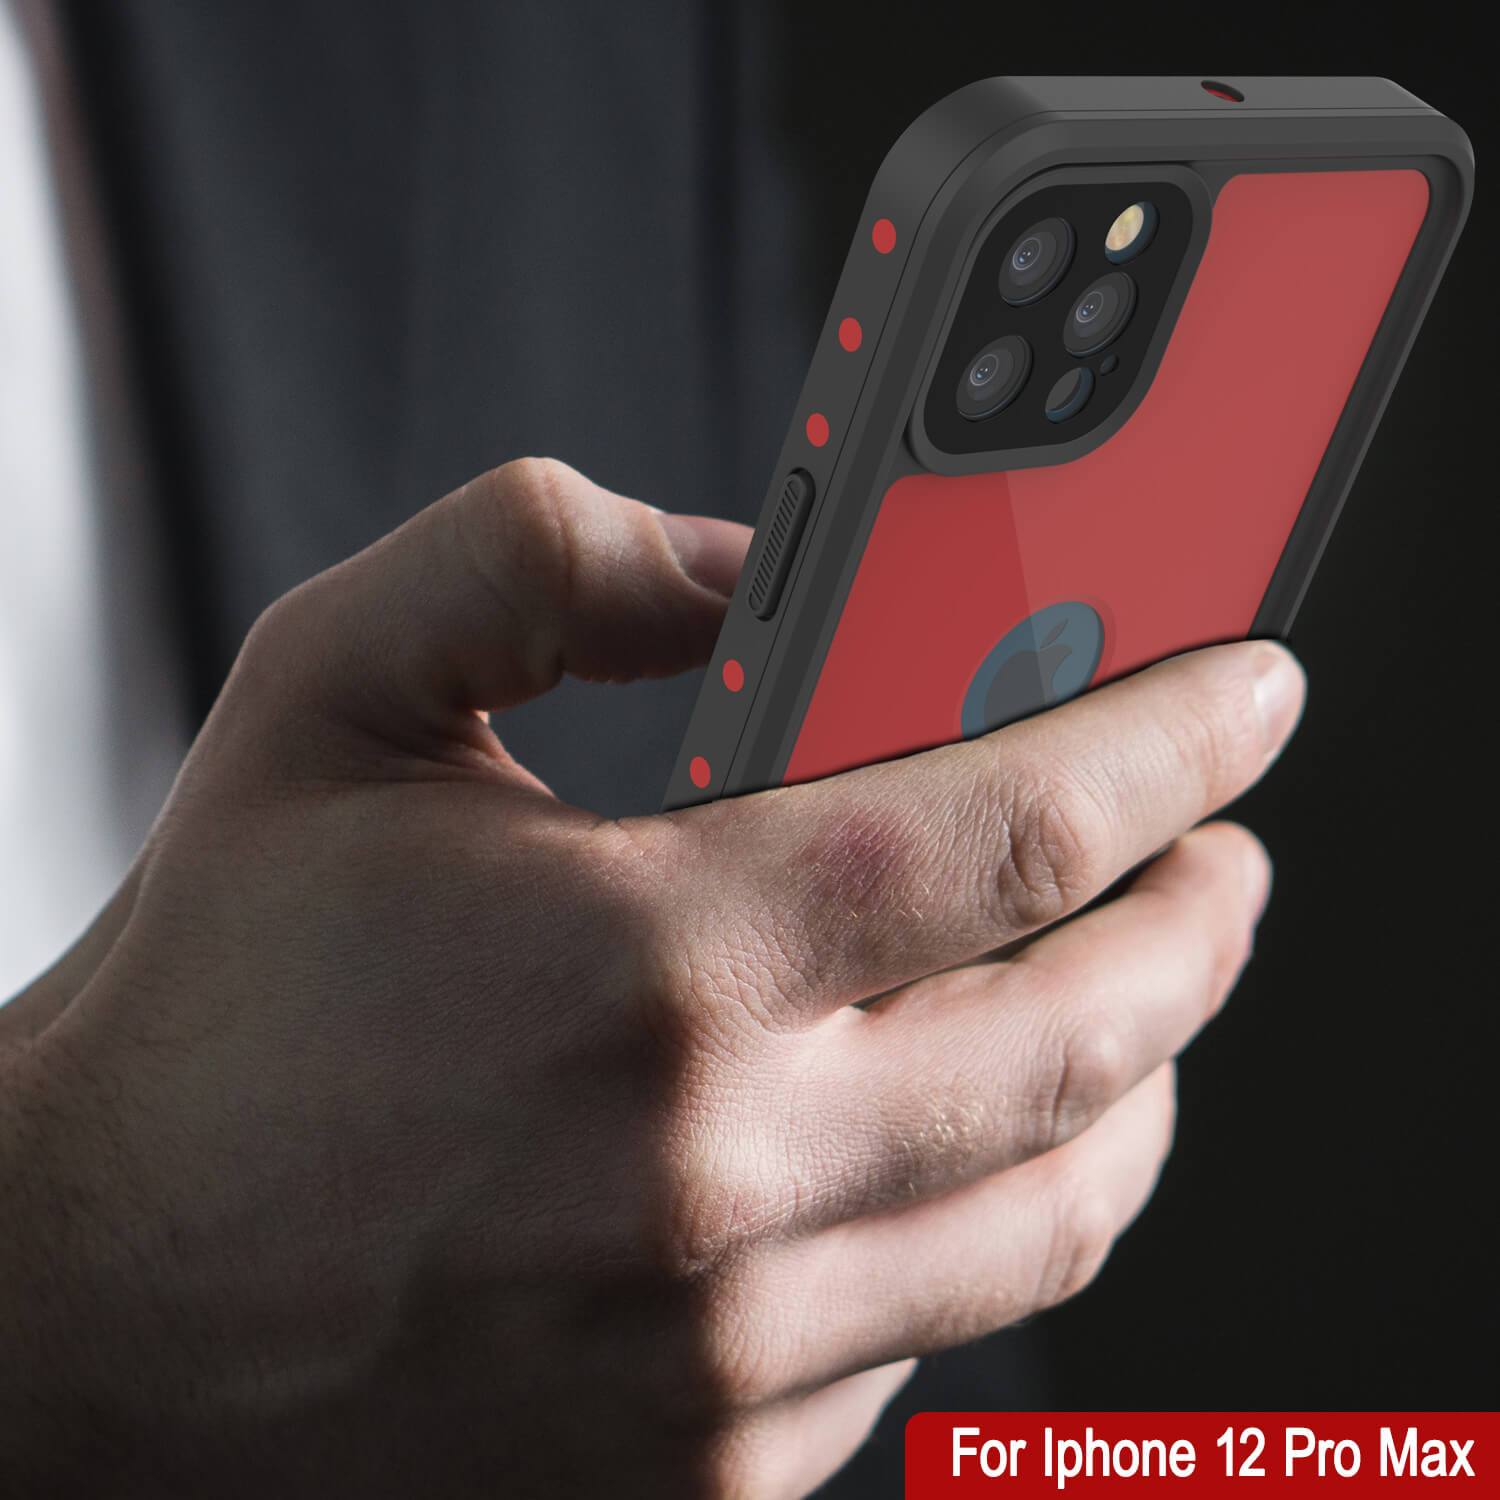 iPhone 12 Pro Max Waterproof IP68 Case, Punkcase [Red] [StudStar Series] [Slim Fit]